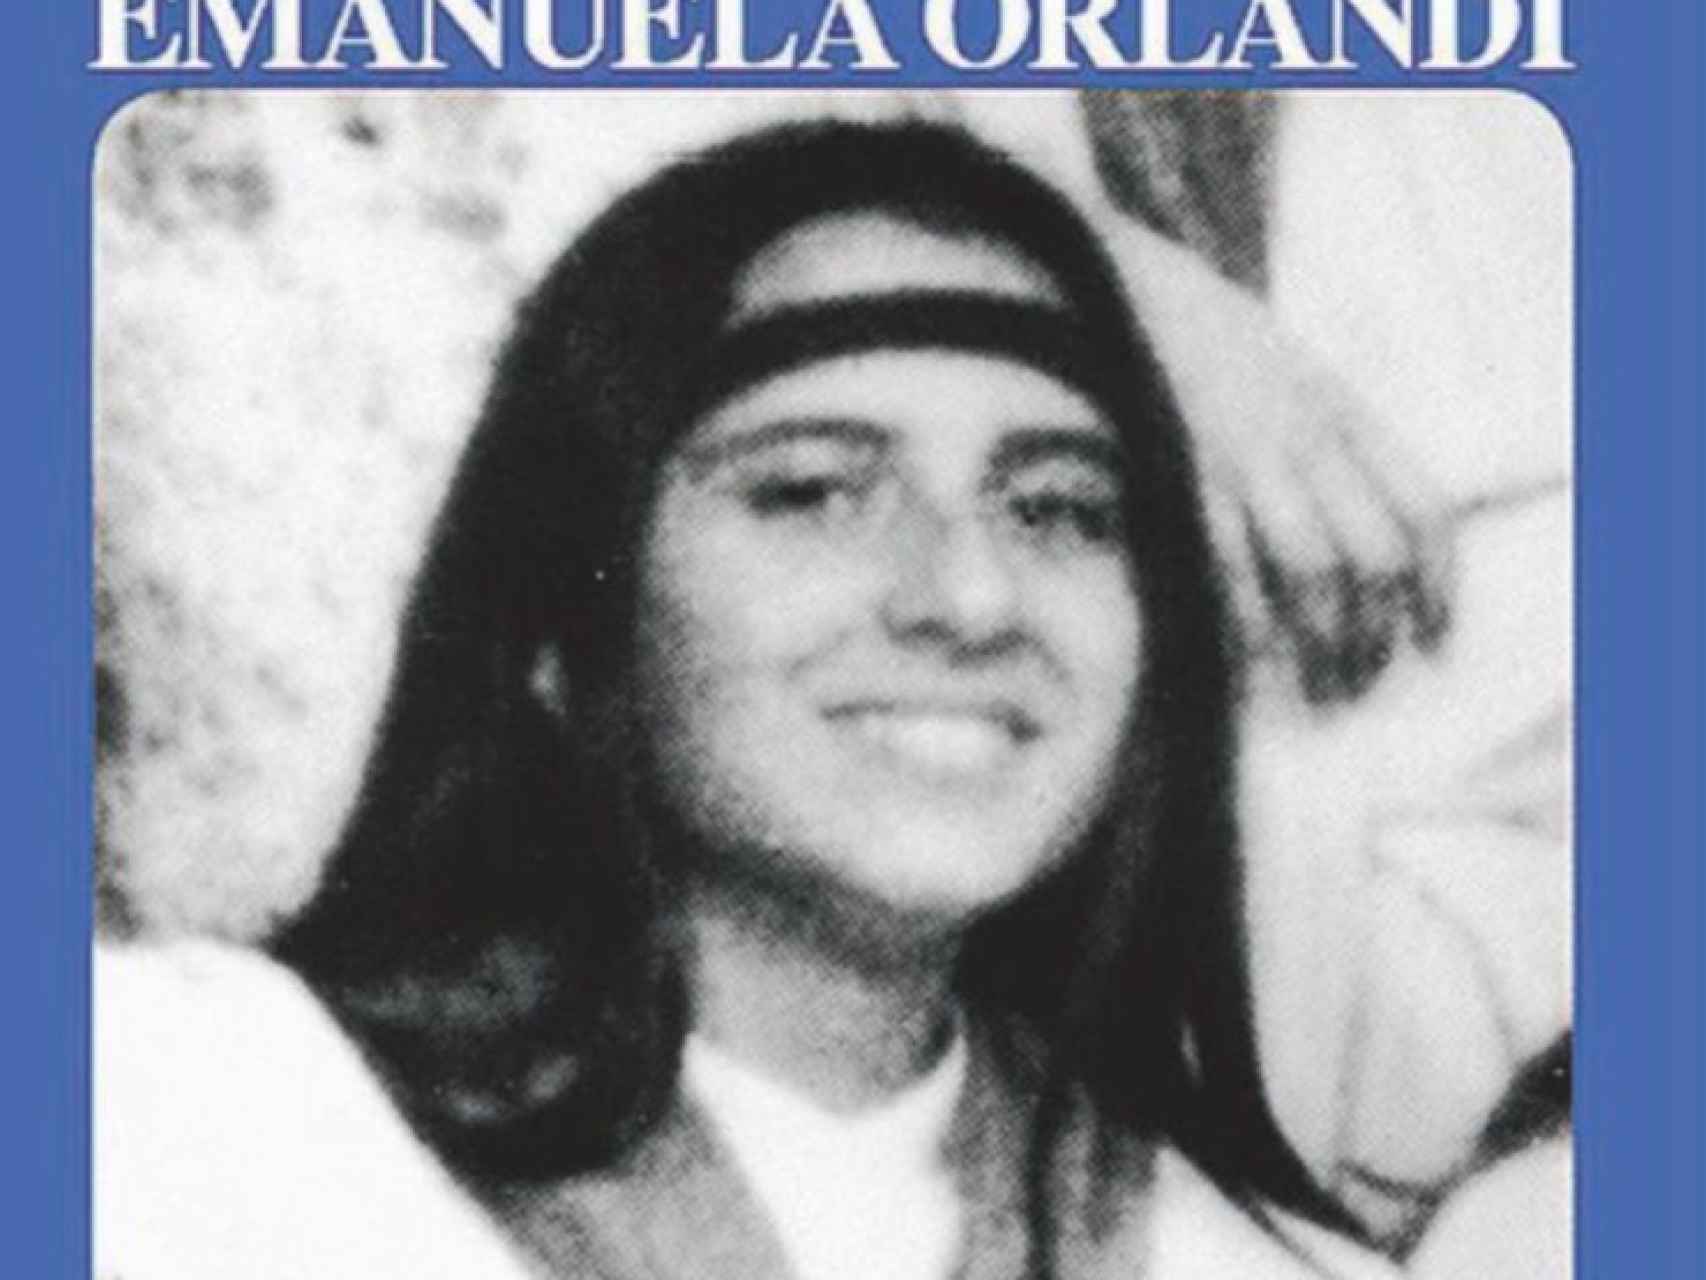 Emanuela Orendi, la chica desaparecida en 1983.